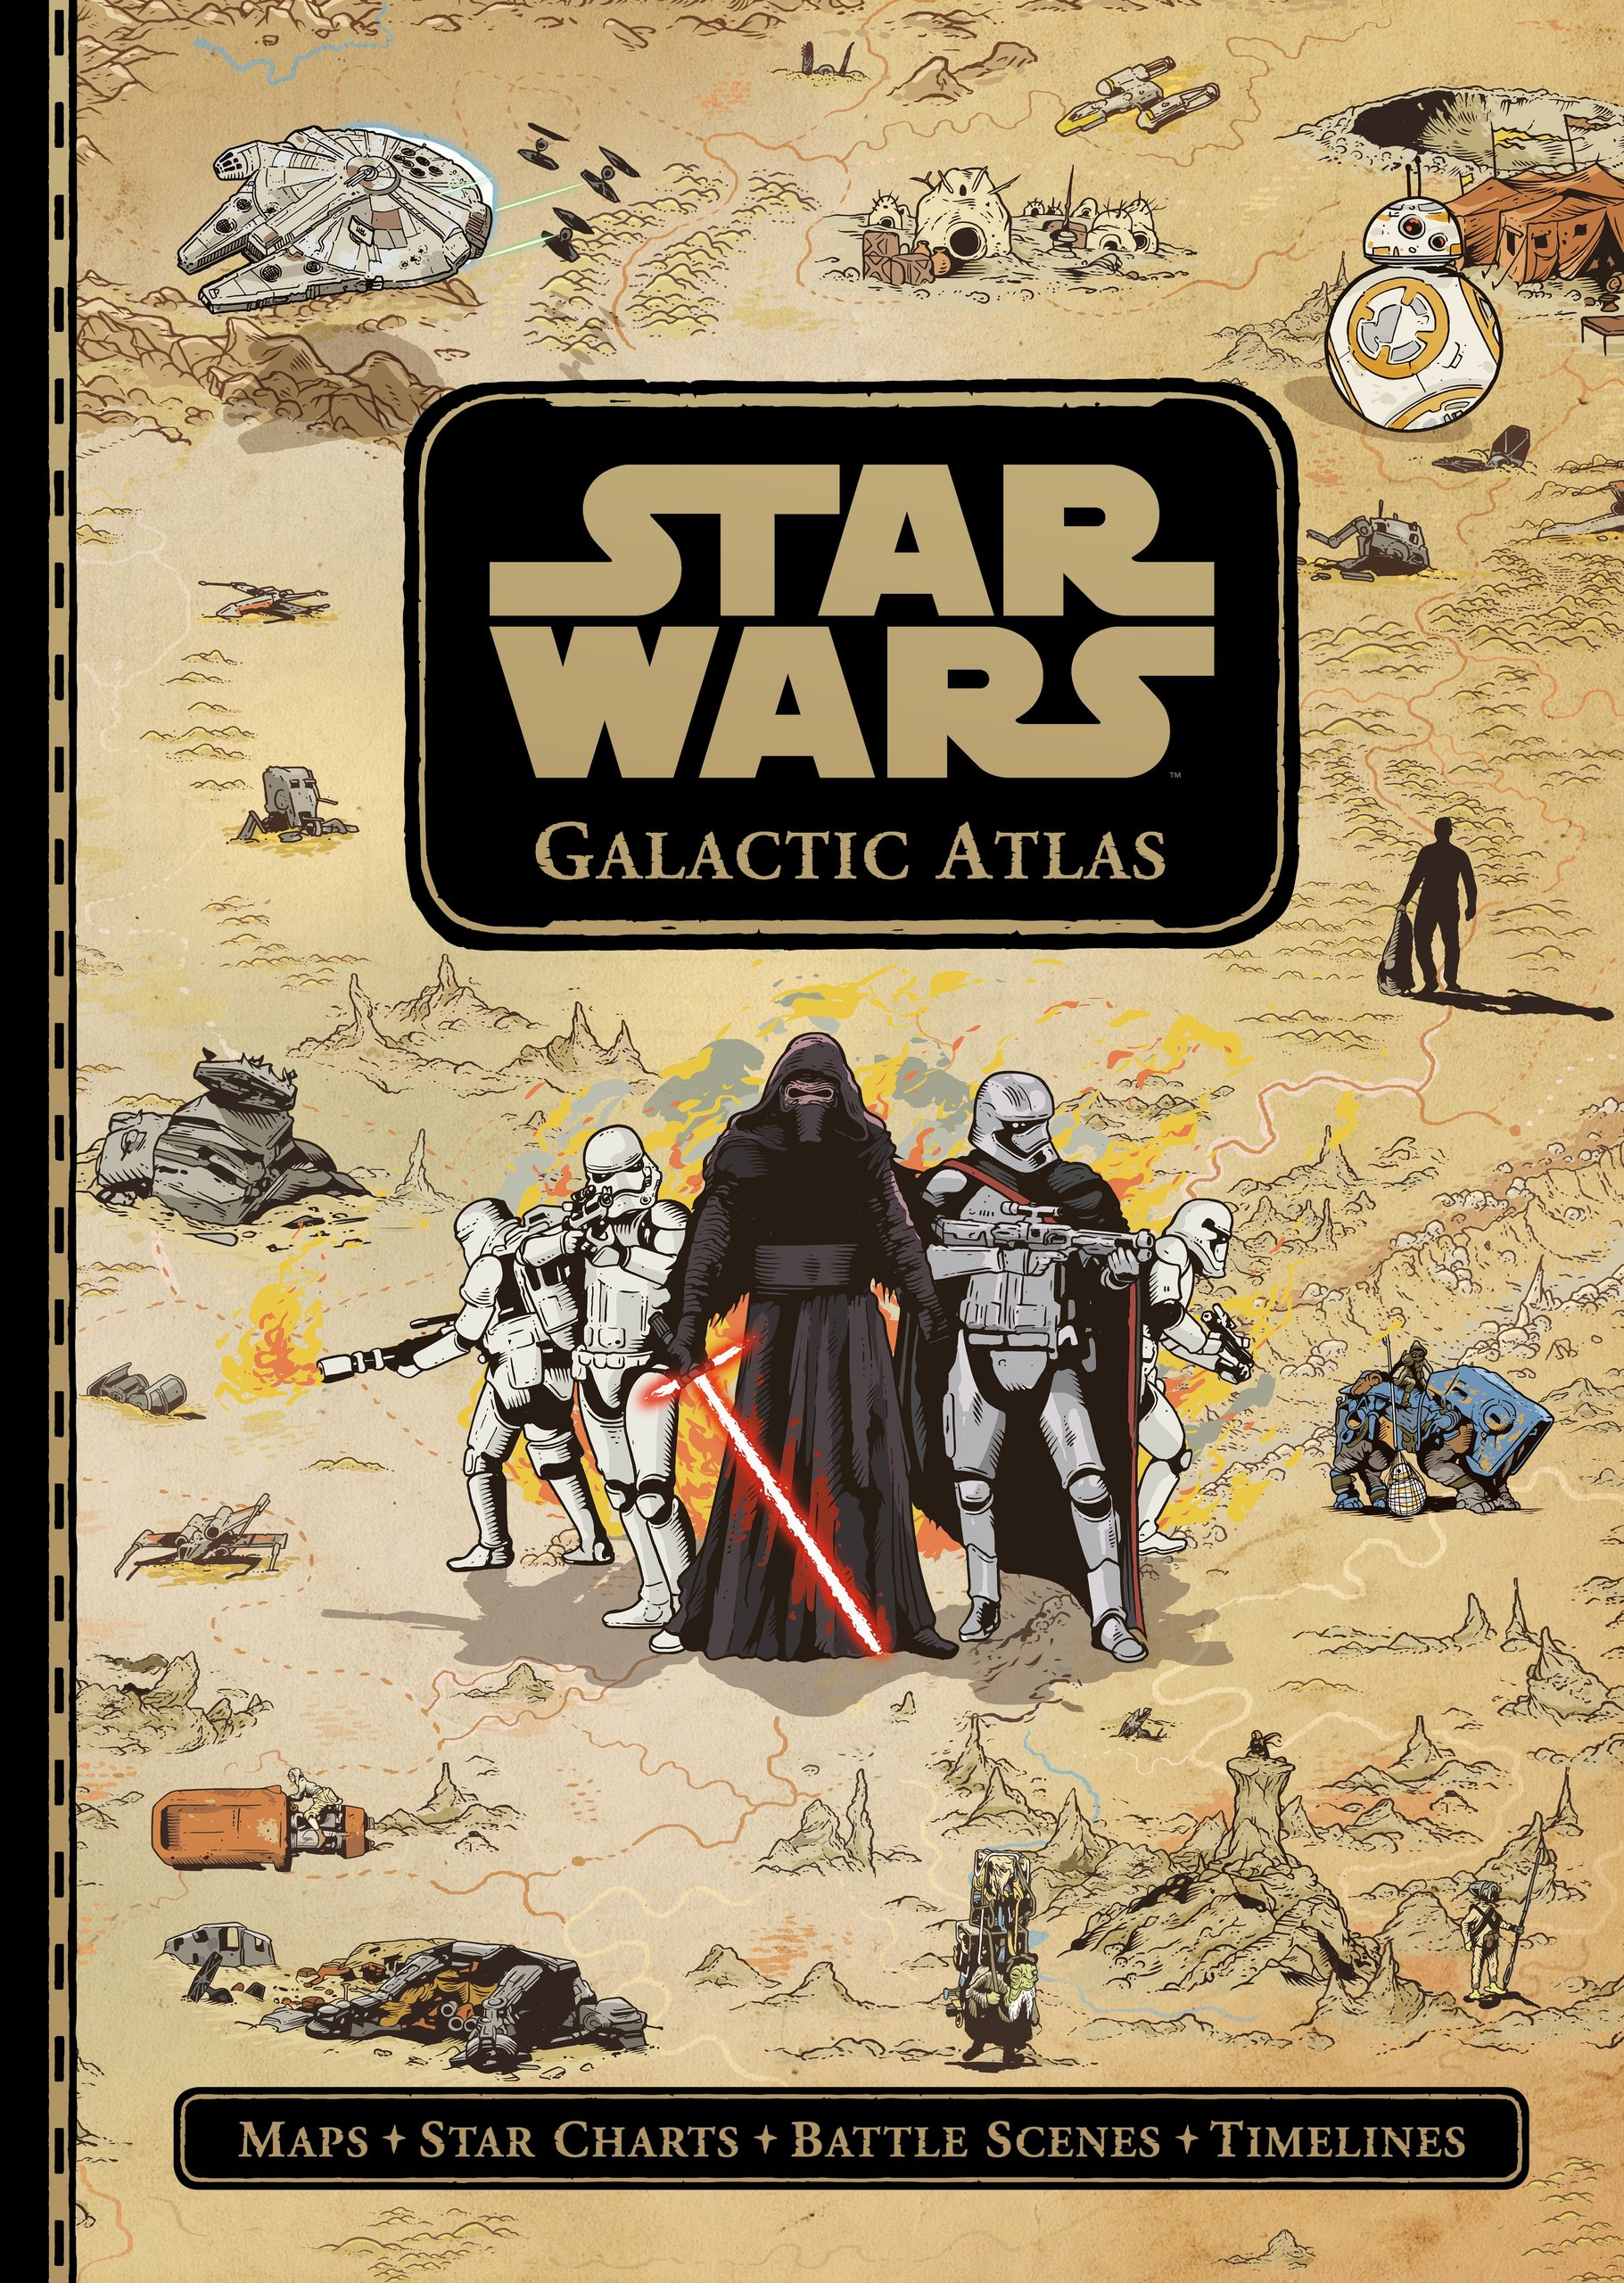 Star Wars Galactic Atlas final cover.png